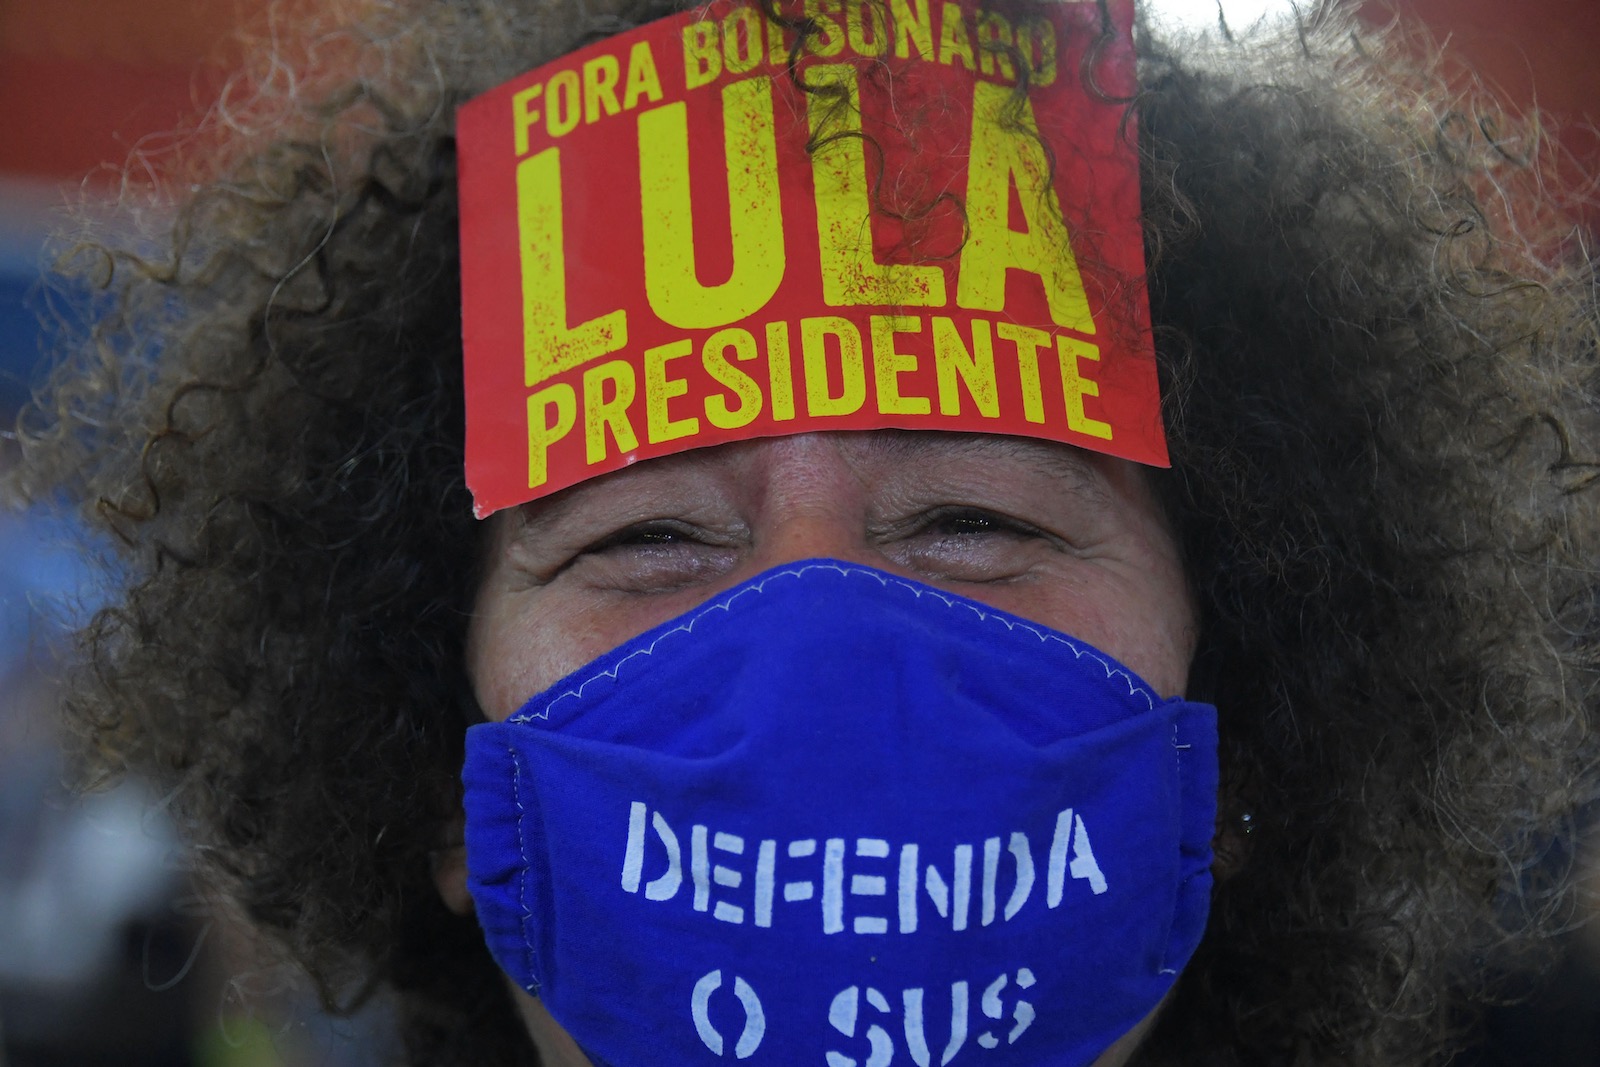 A supporter of Brazil’s former president Luiz Inácio Lula da Silva